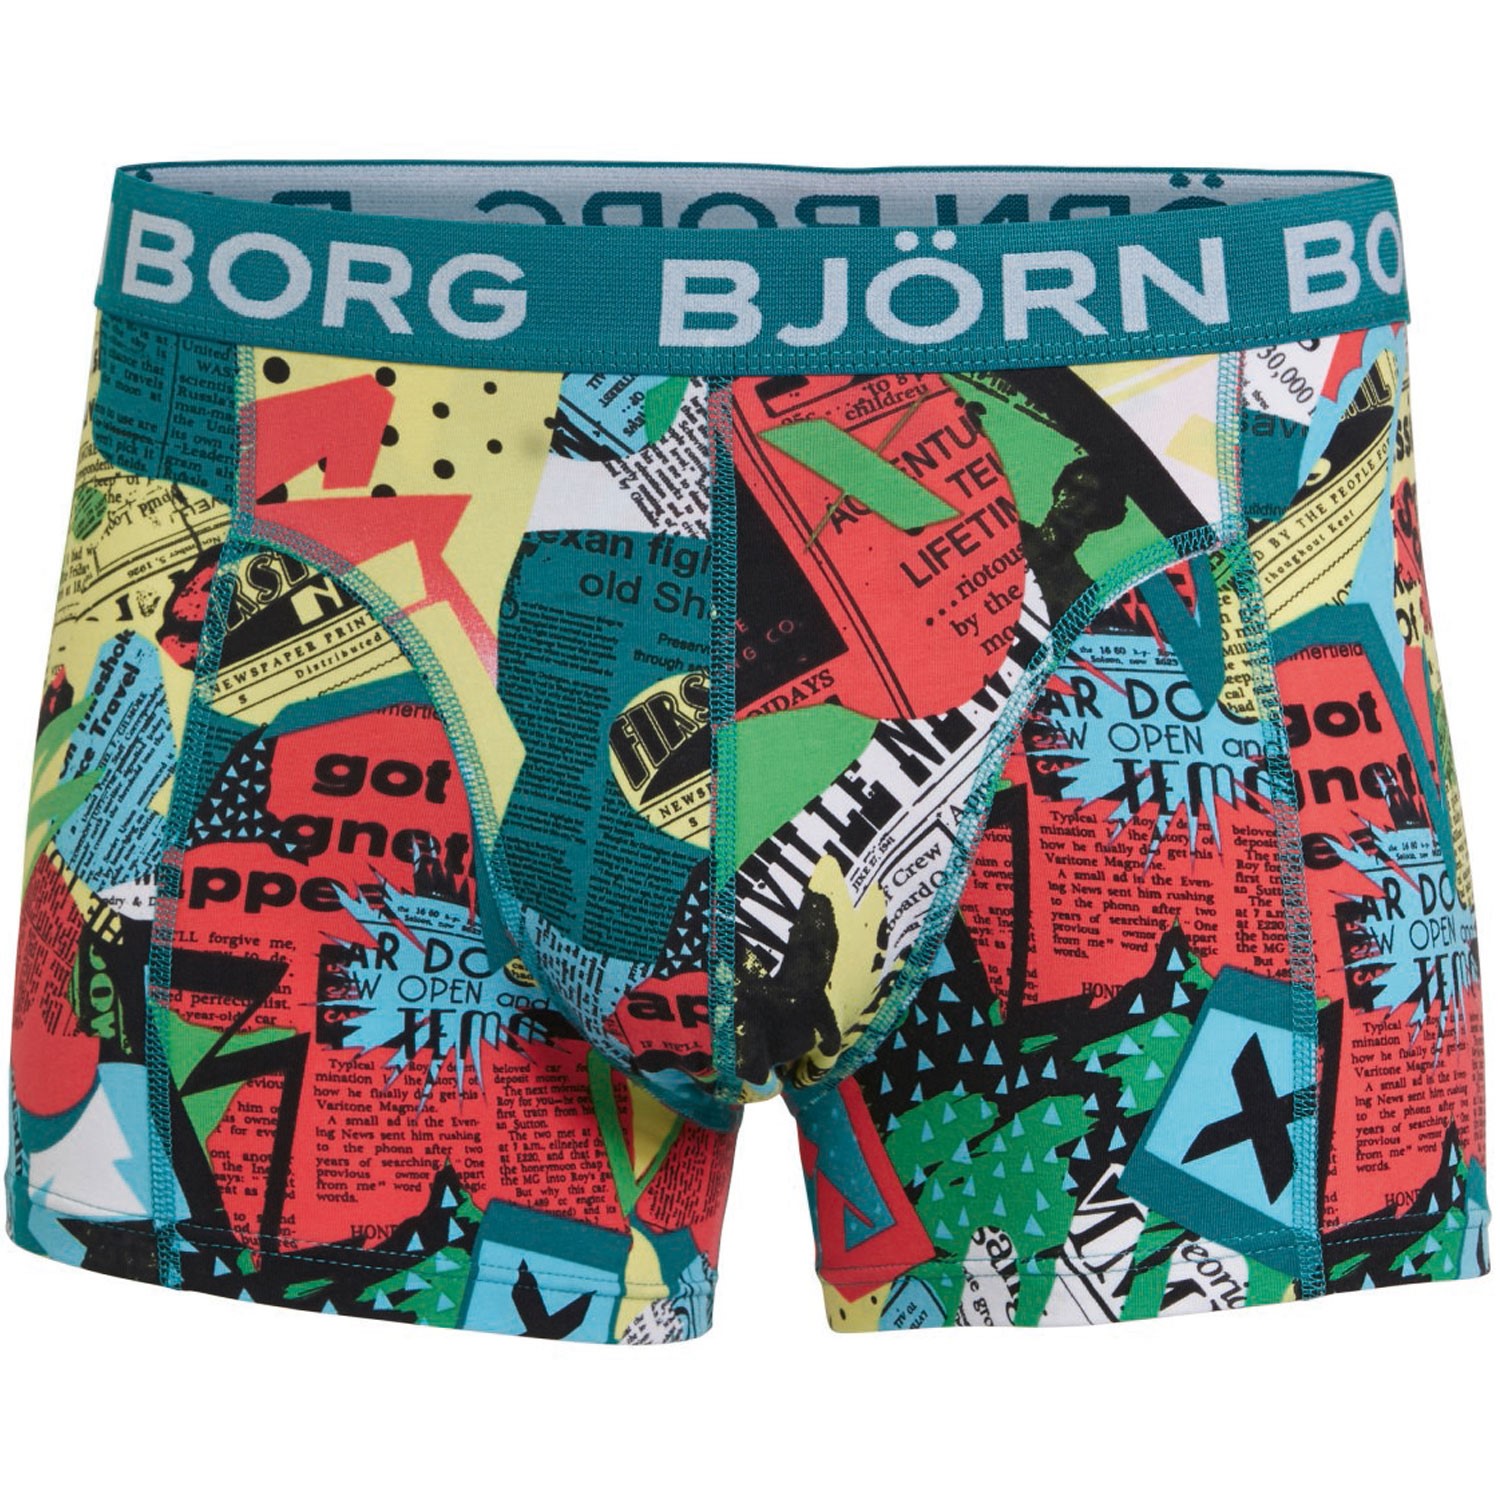 Björn Borg Short Shorts Newspaper